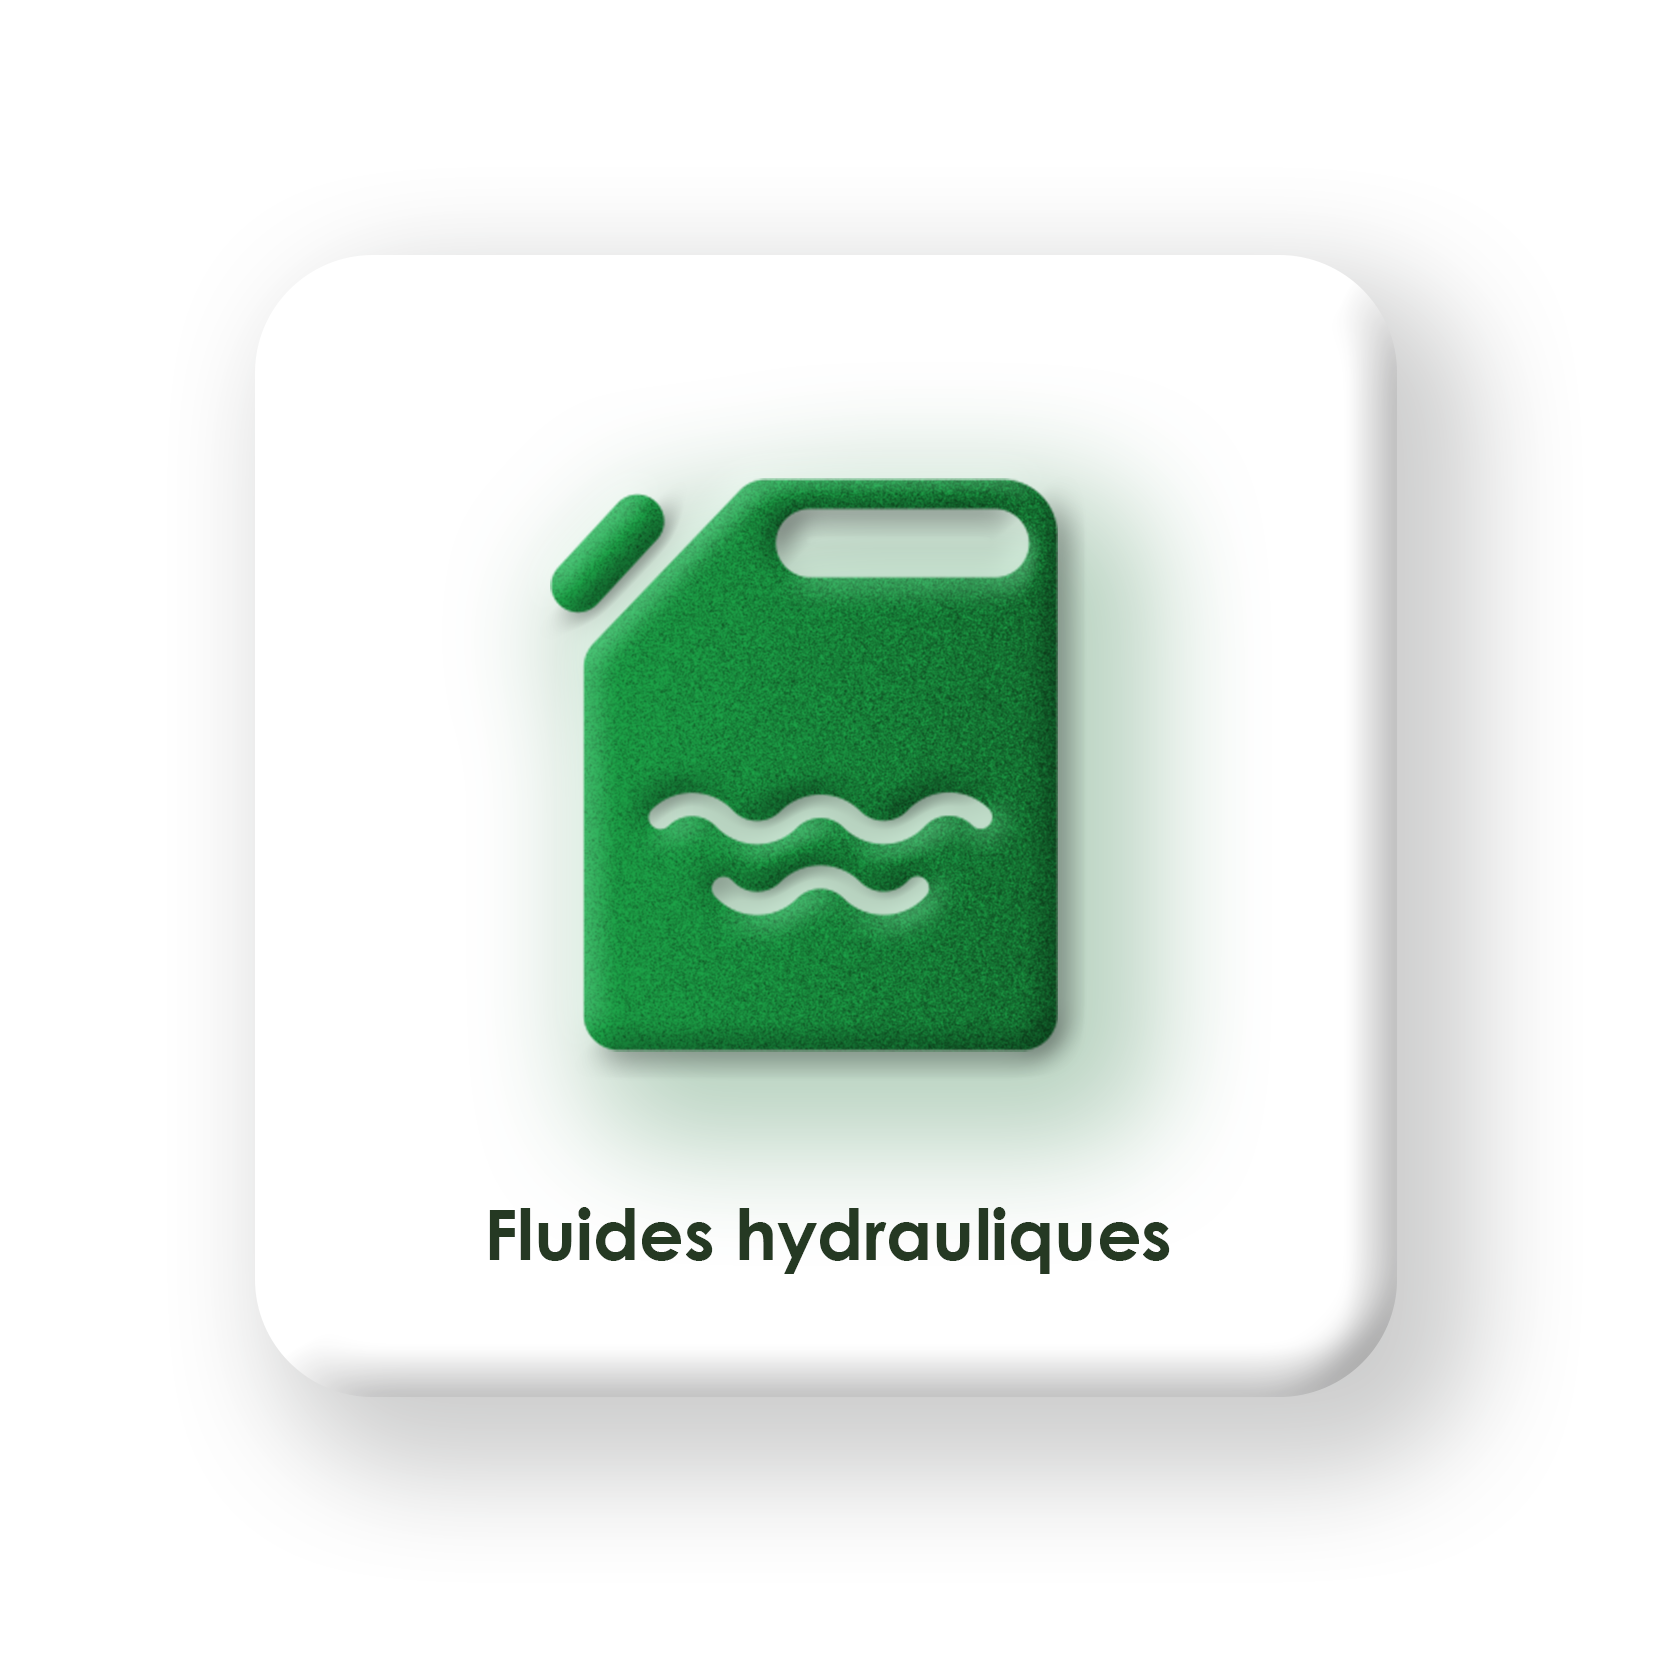 Fluides hydrauliques